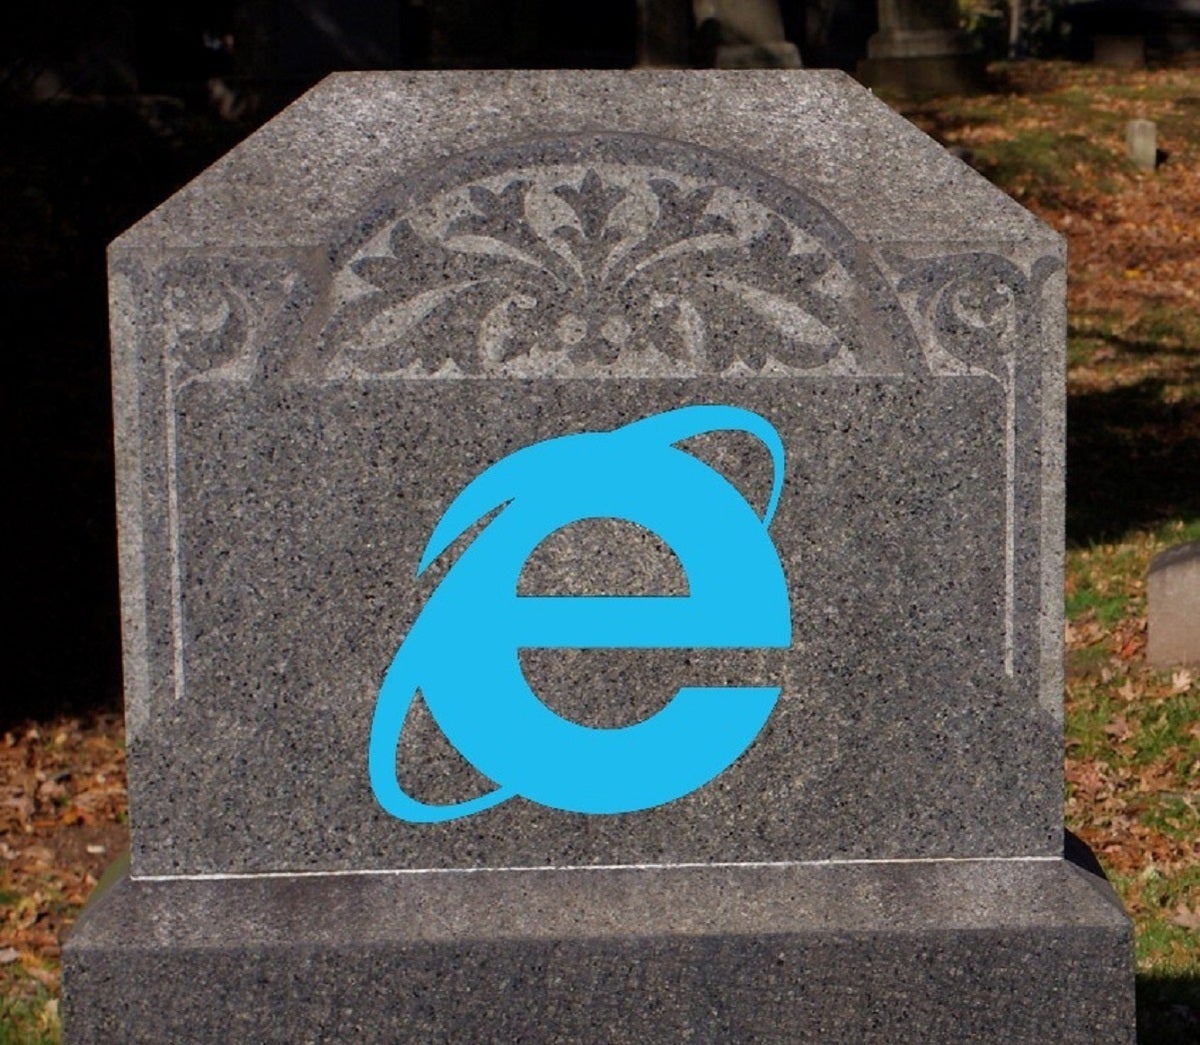 Who killed Internet Explorer?